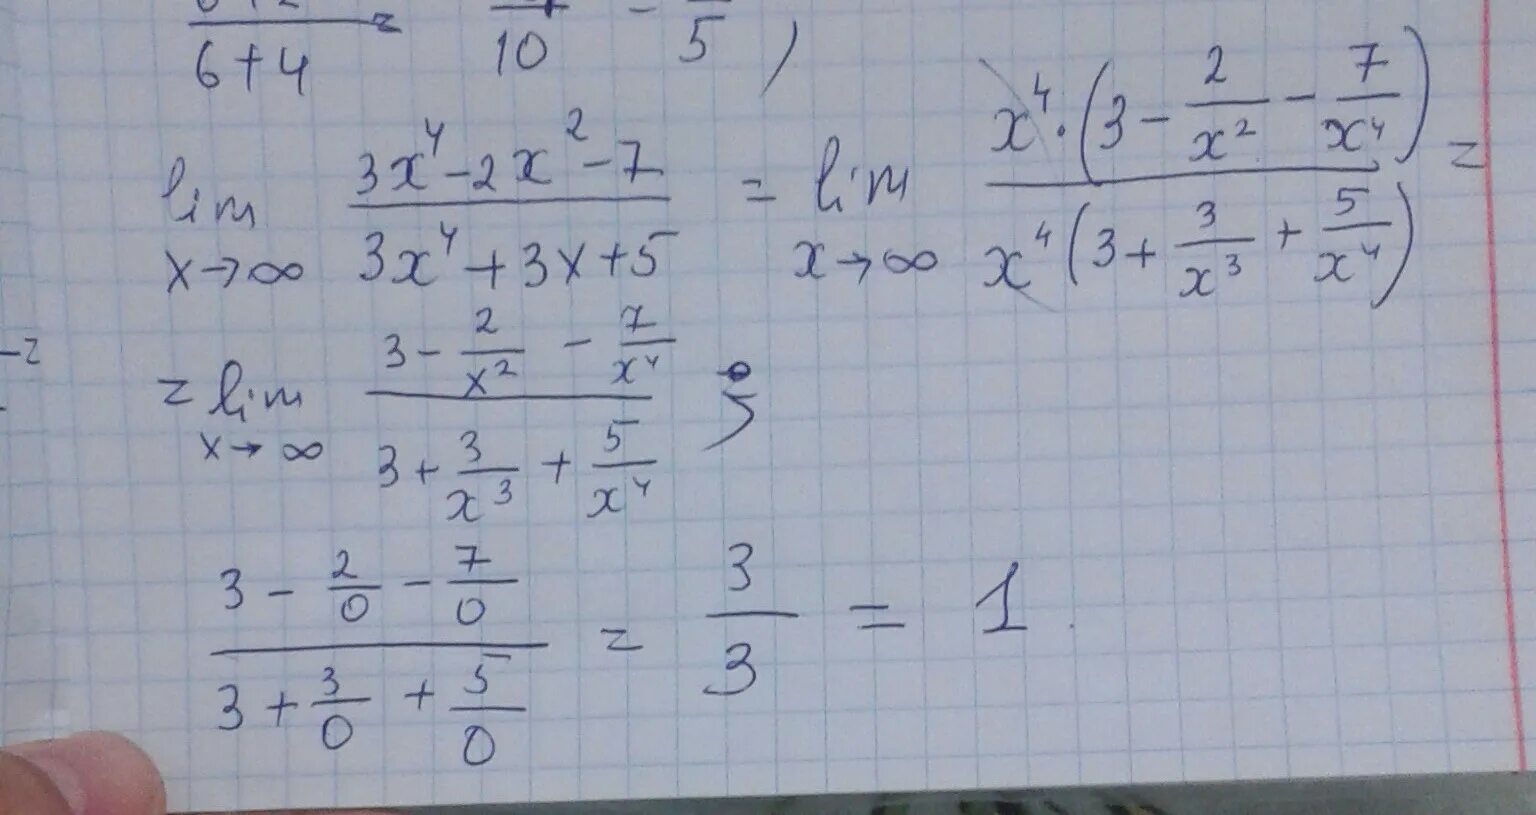 21 5 3 x 6. Lim x стремится к бесконечности 2/x 2+3x. Lim x стремится к бесконечности x^2-4x+3/x+5. Lim x стремиться к бесконечности ( 2x/2x-3)^3x. Lim x стремится к бесконечности 3+x-5x4.